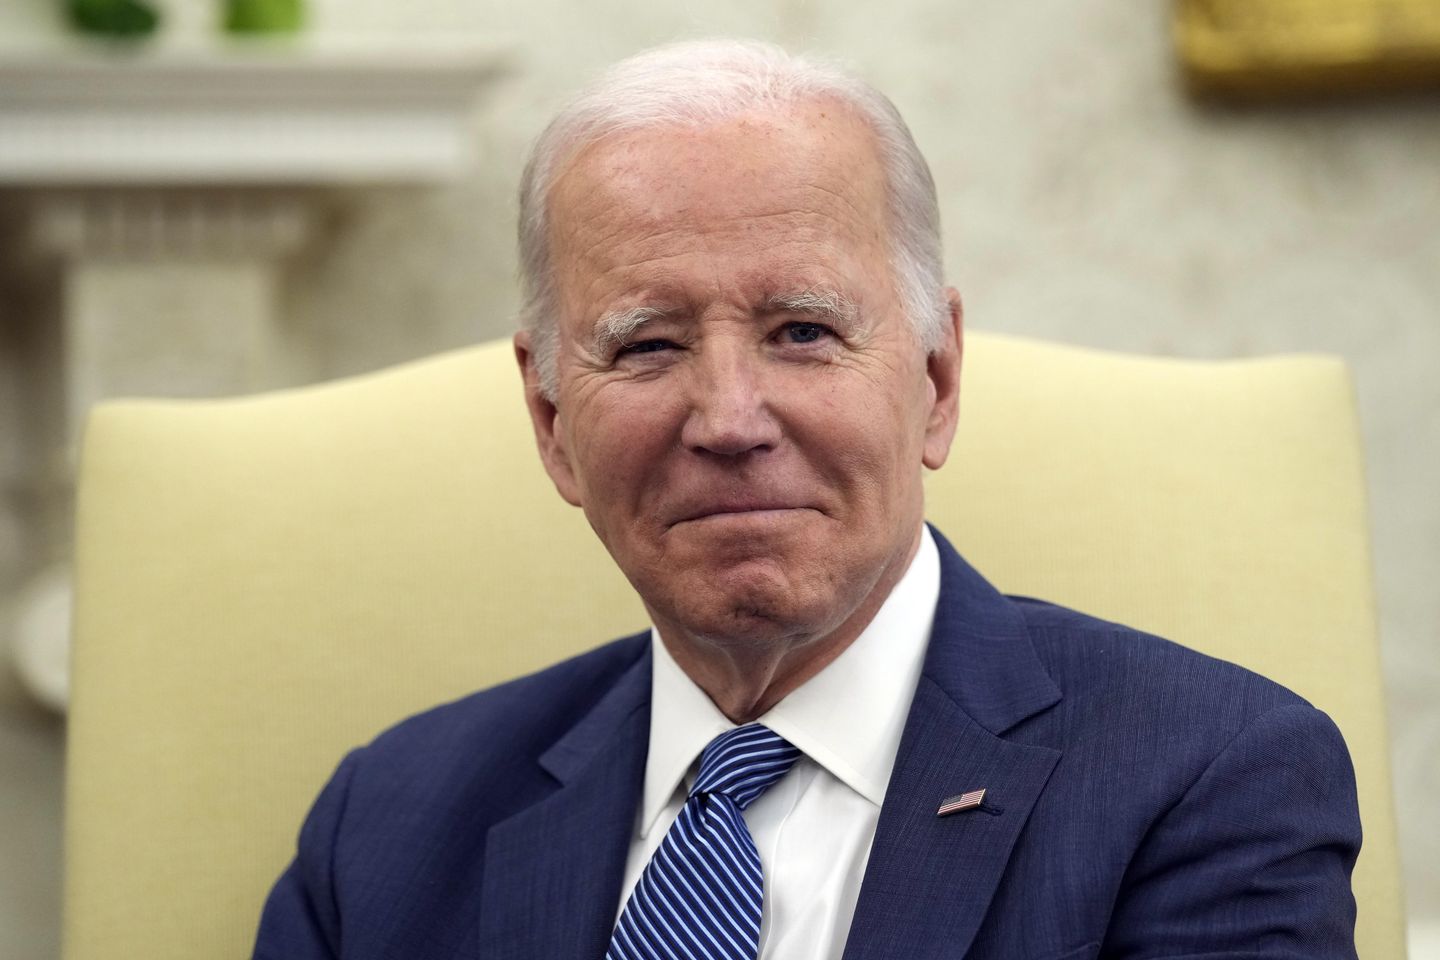 Biden campaign launches ads touting bipartisan debt deal, economic gains